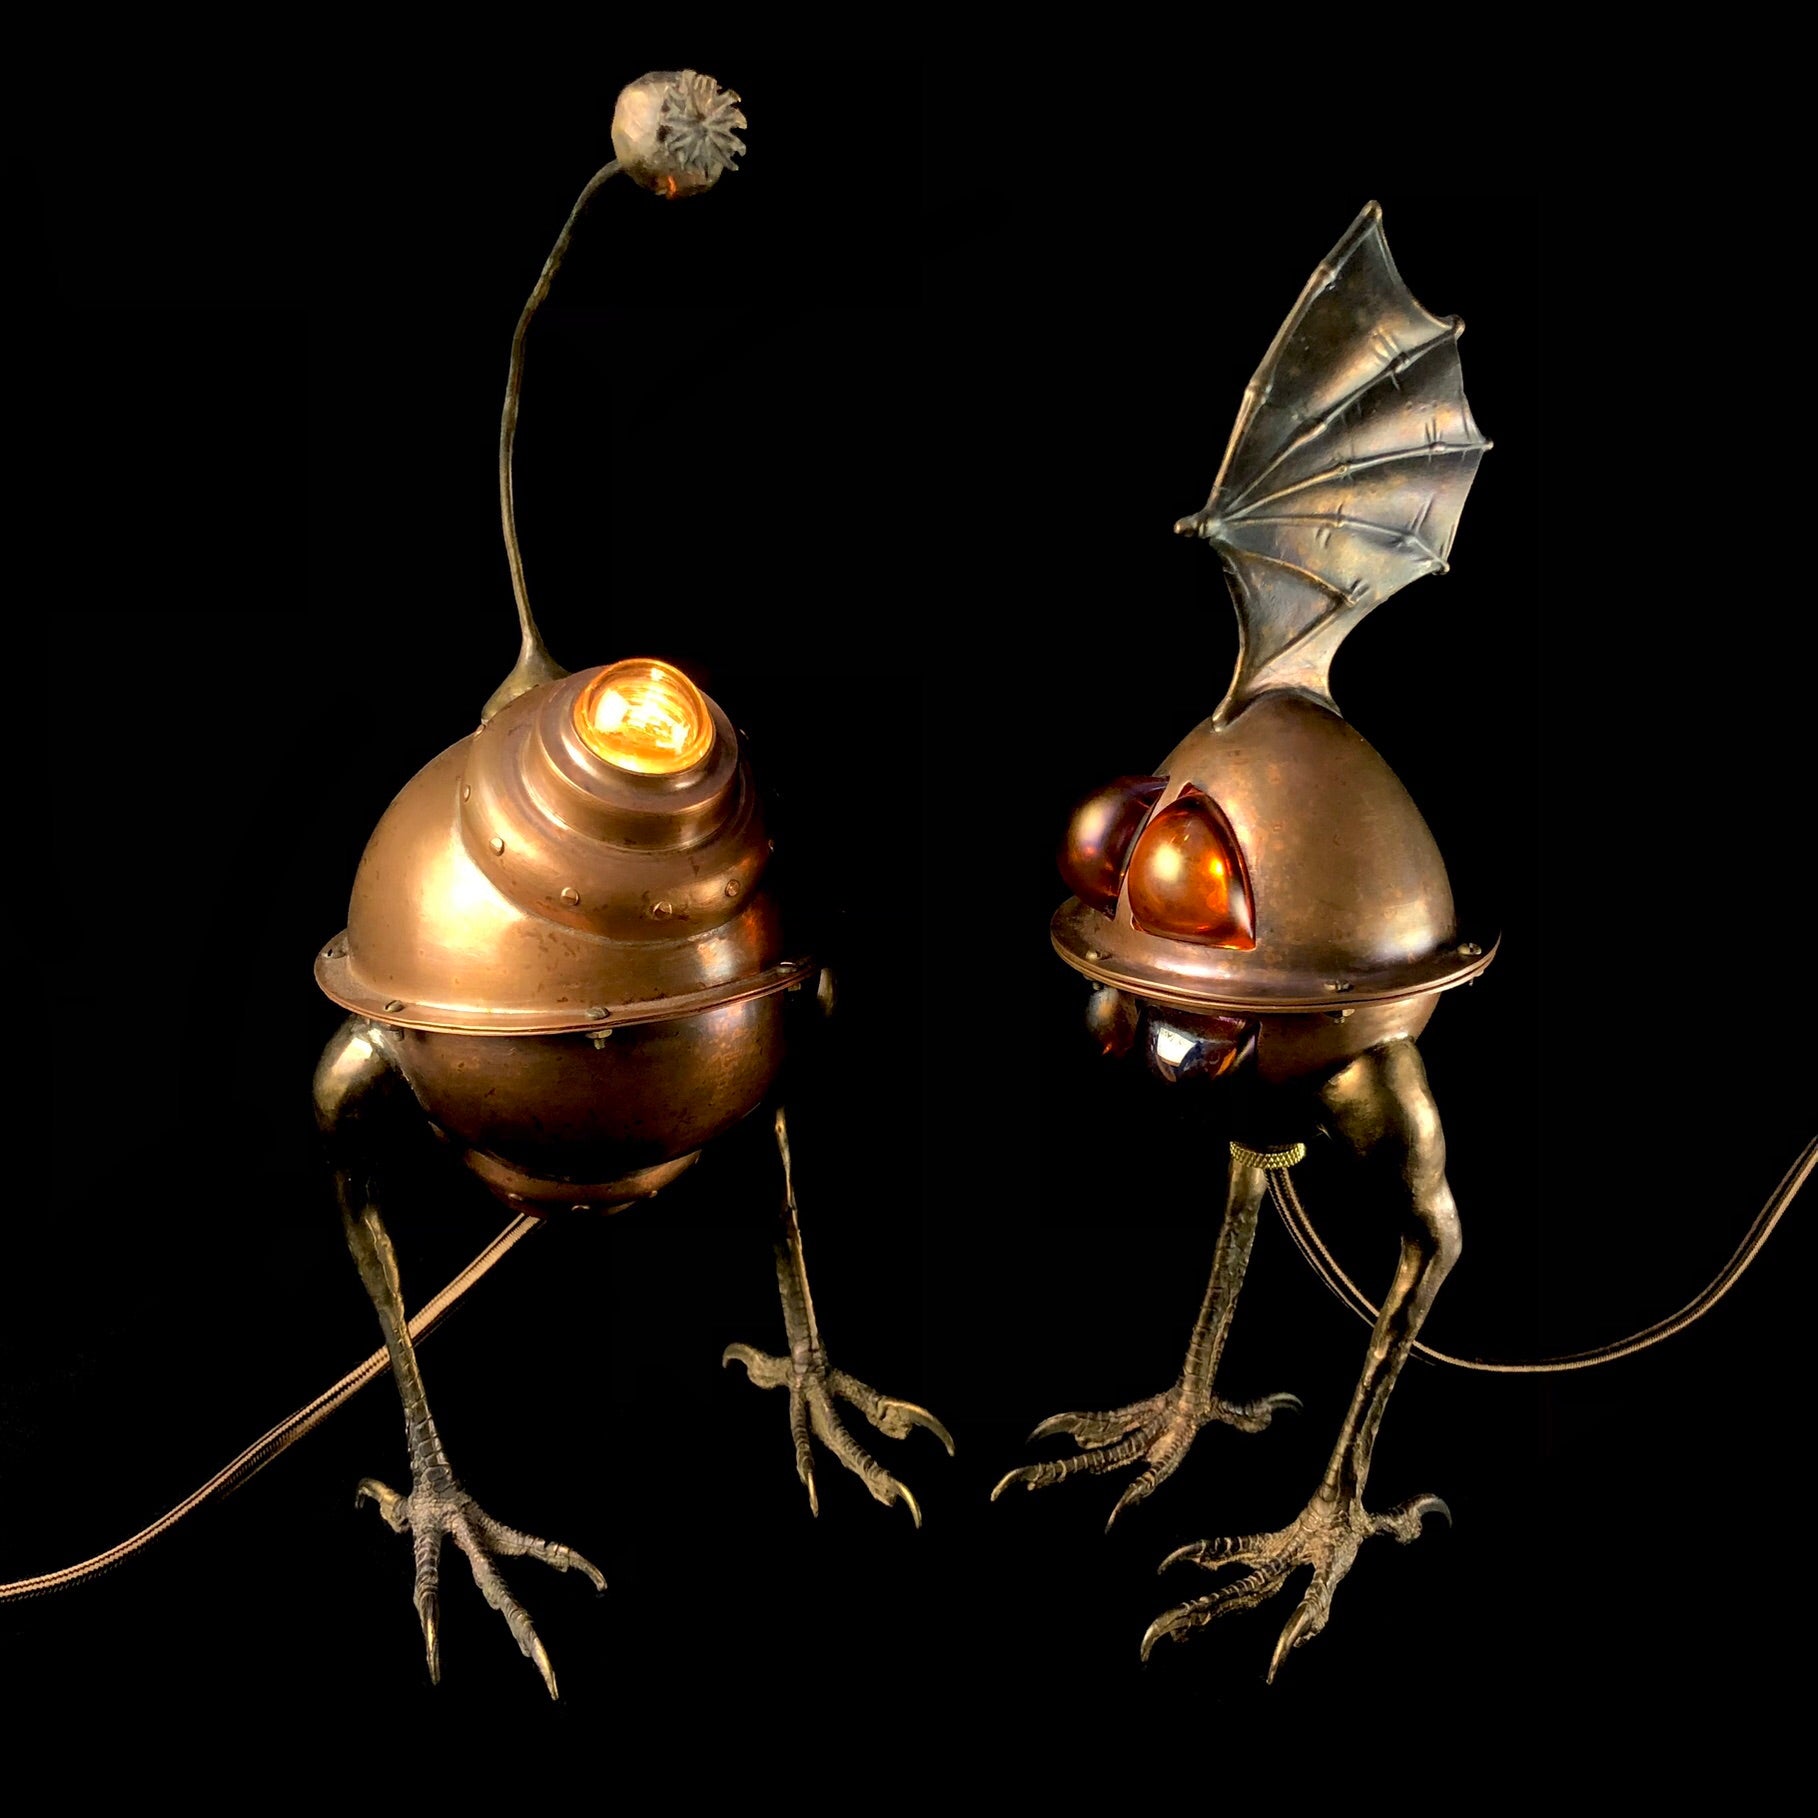 Hawk Bat Lamp and Opium Gazer Lamp shown side by side